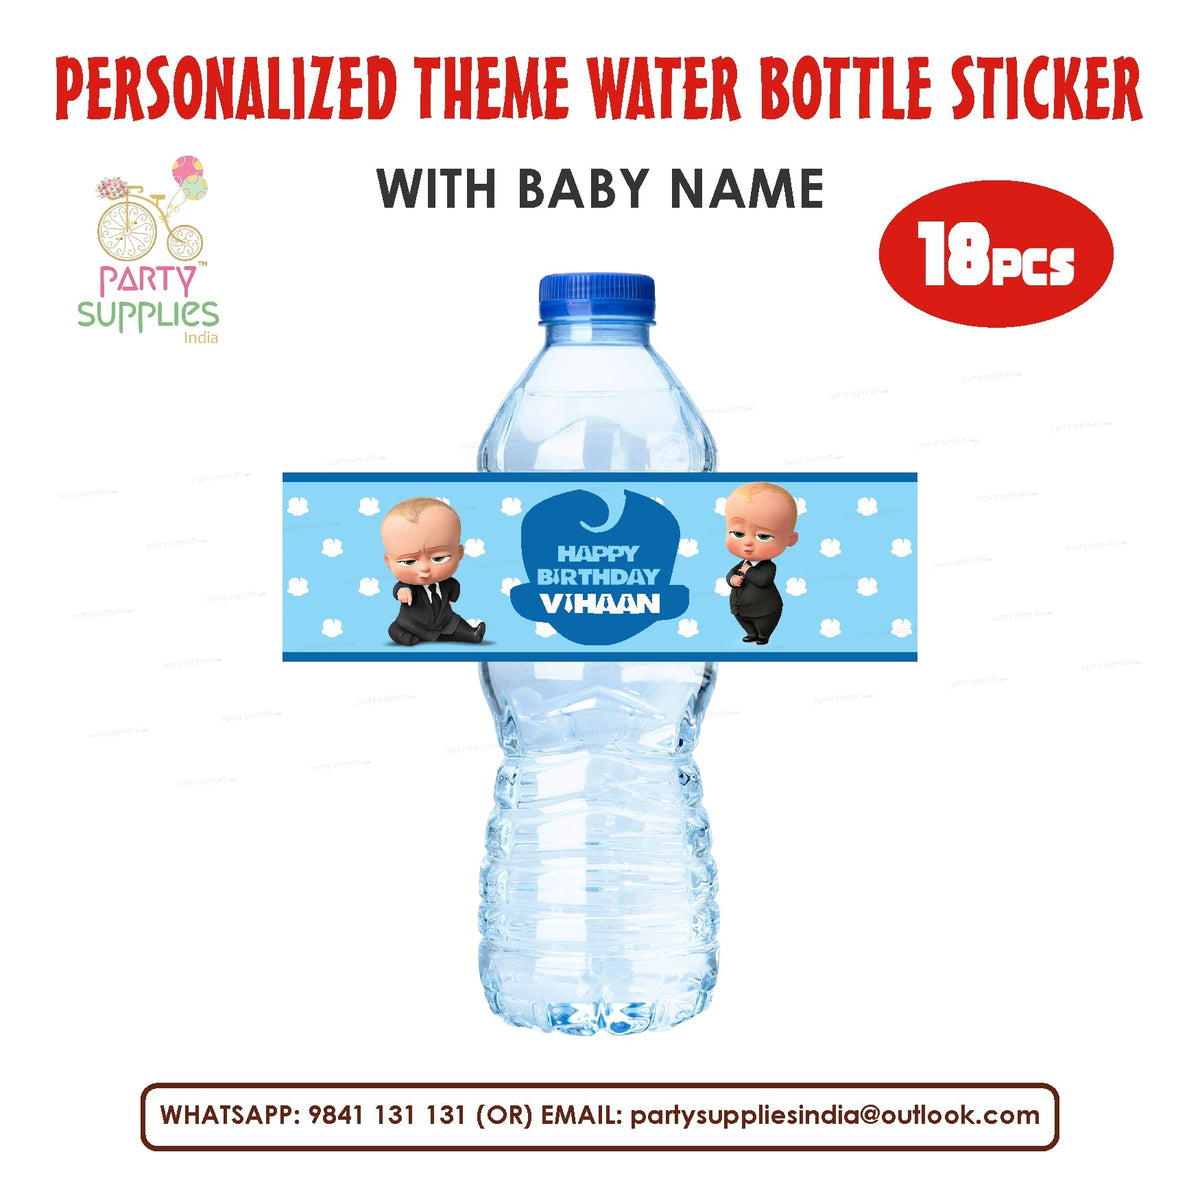 PSI Boss baby Theme Water Bottle Sticker